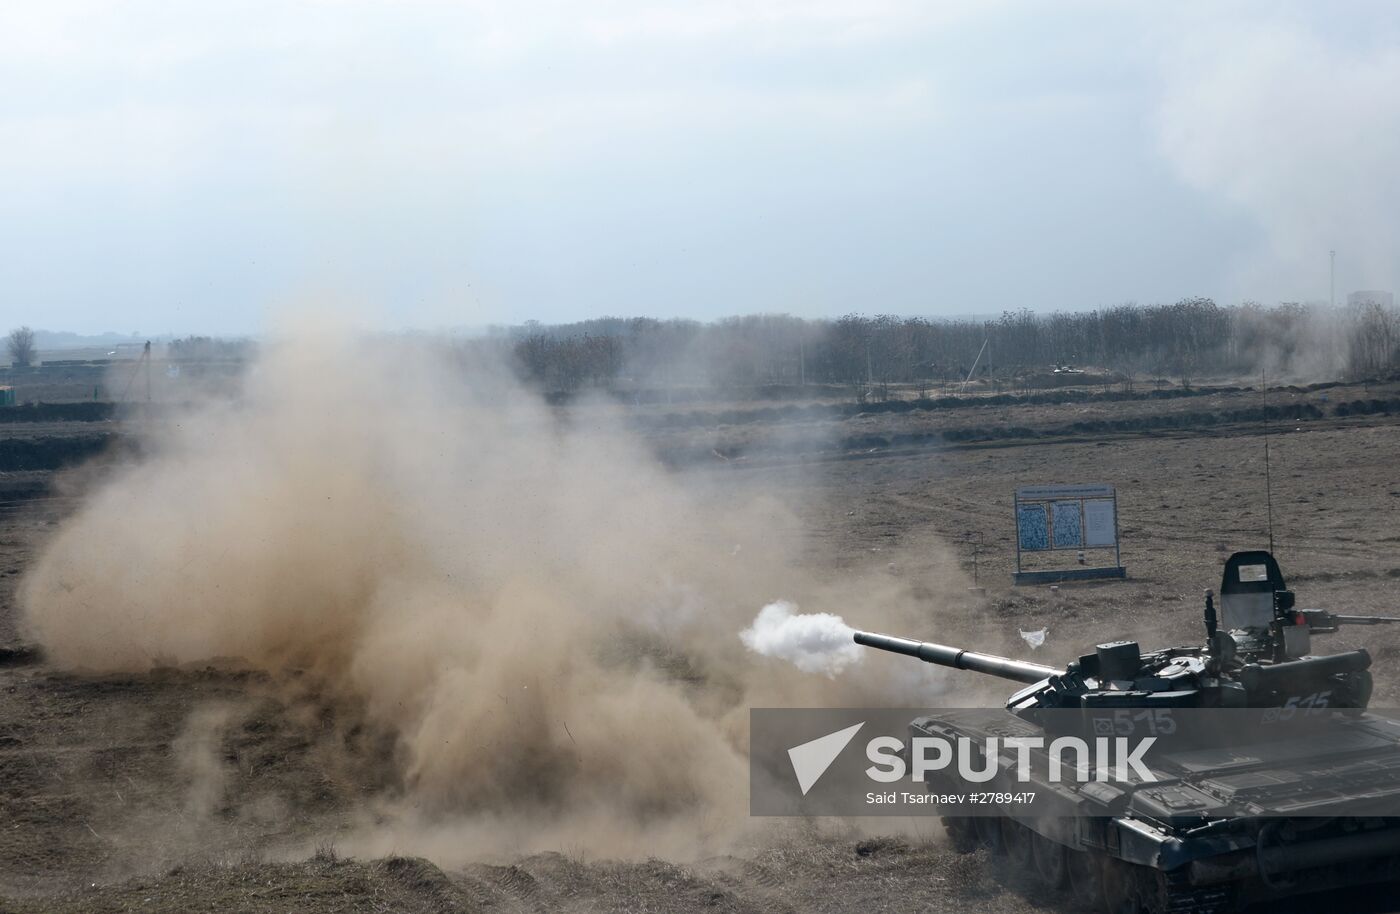 Motorized infantry exercise at Sernovodsky range